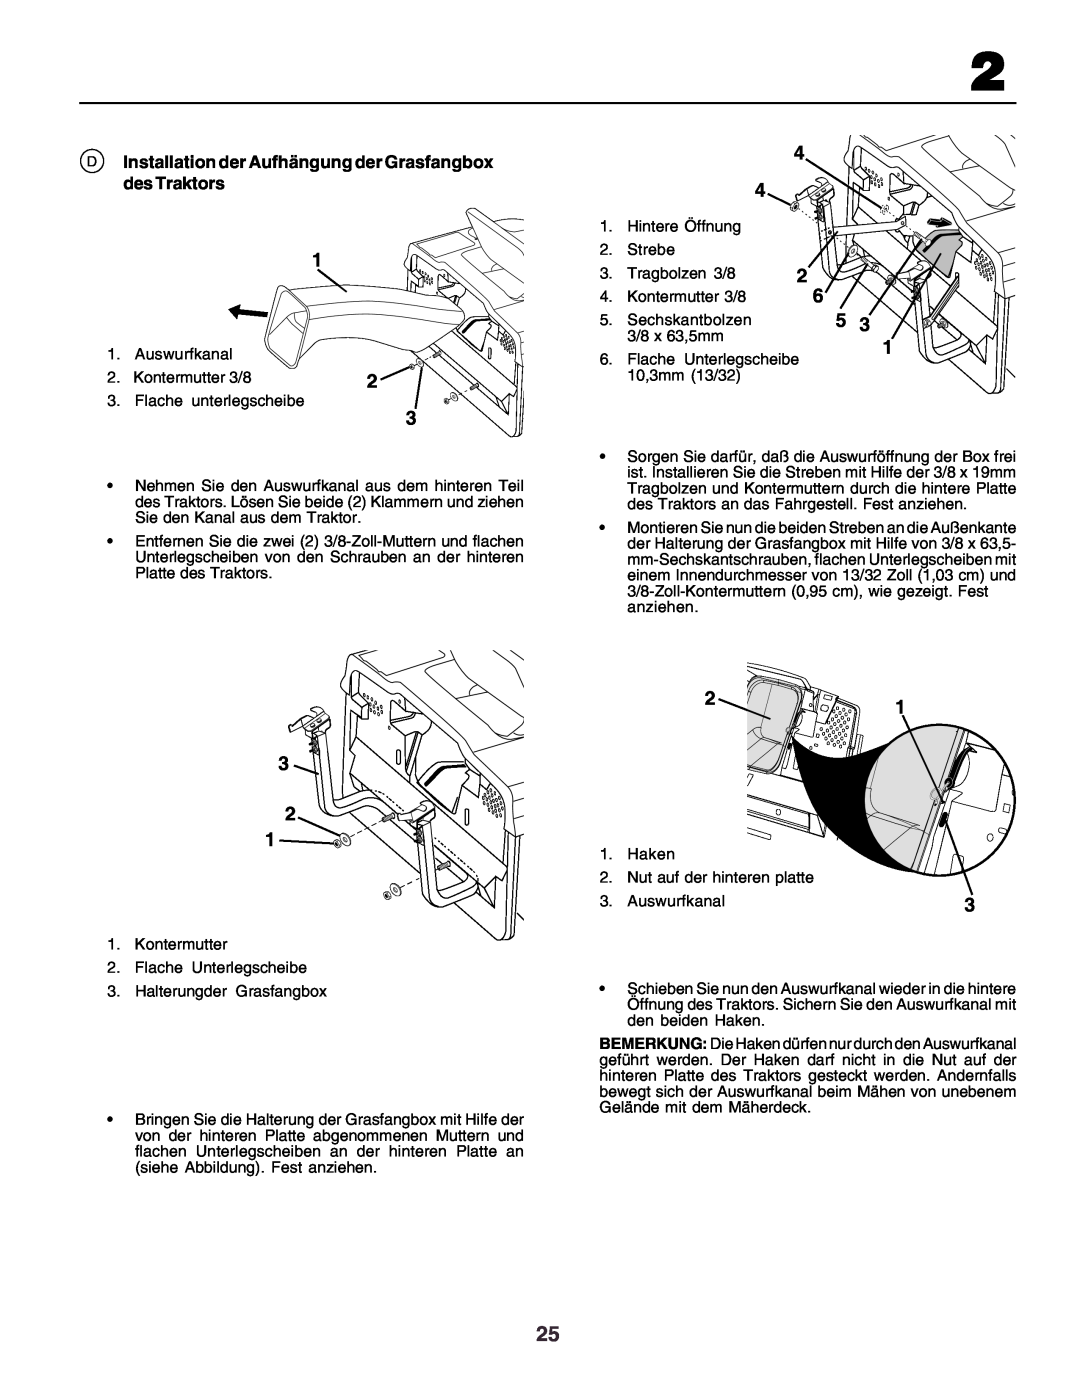 Husqvarna CT160 instruction manual 3 2 1, Auswurfkanal 